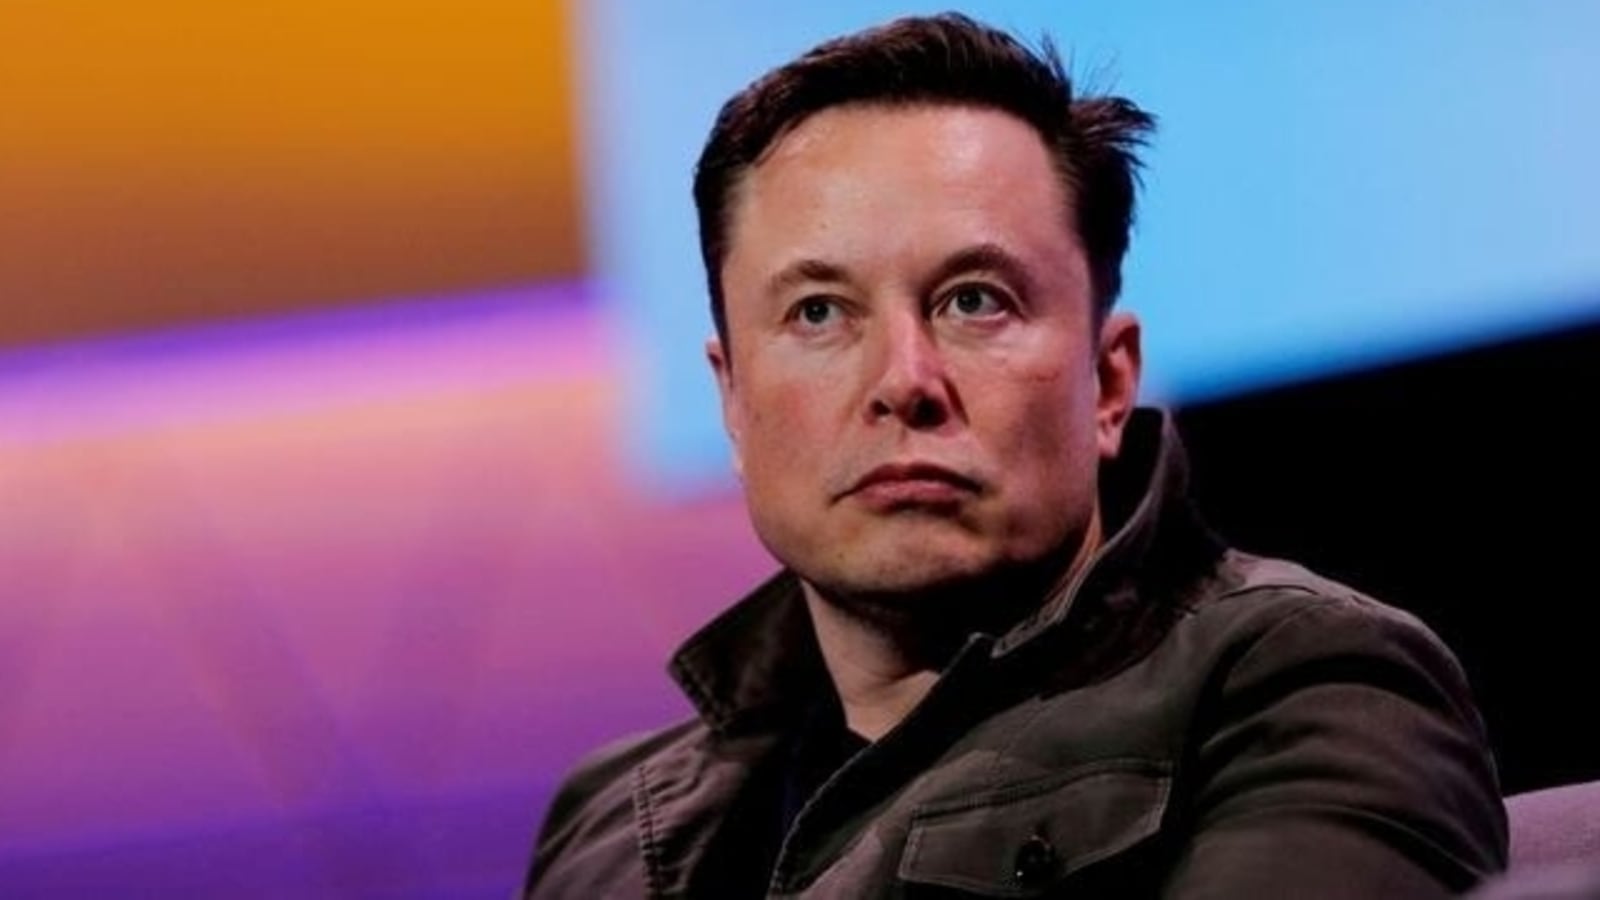 The $200 Billion club loses last member as Elon Musk’s wealth tumbles